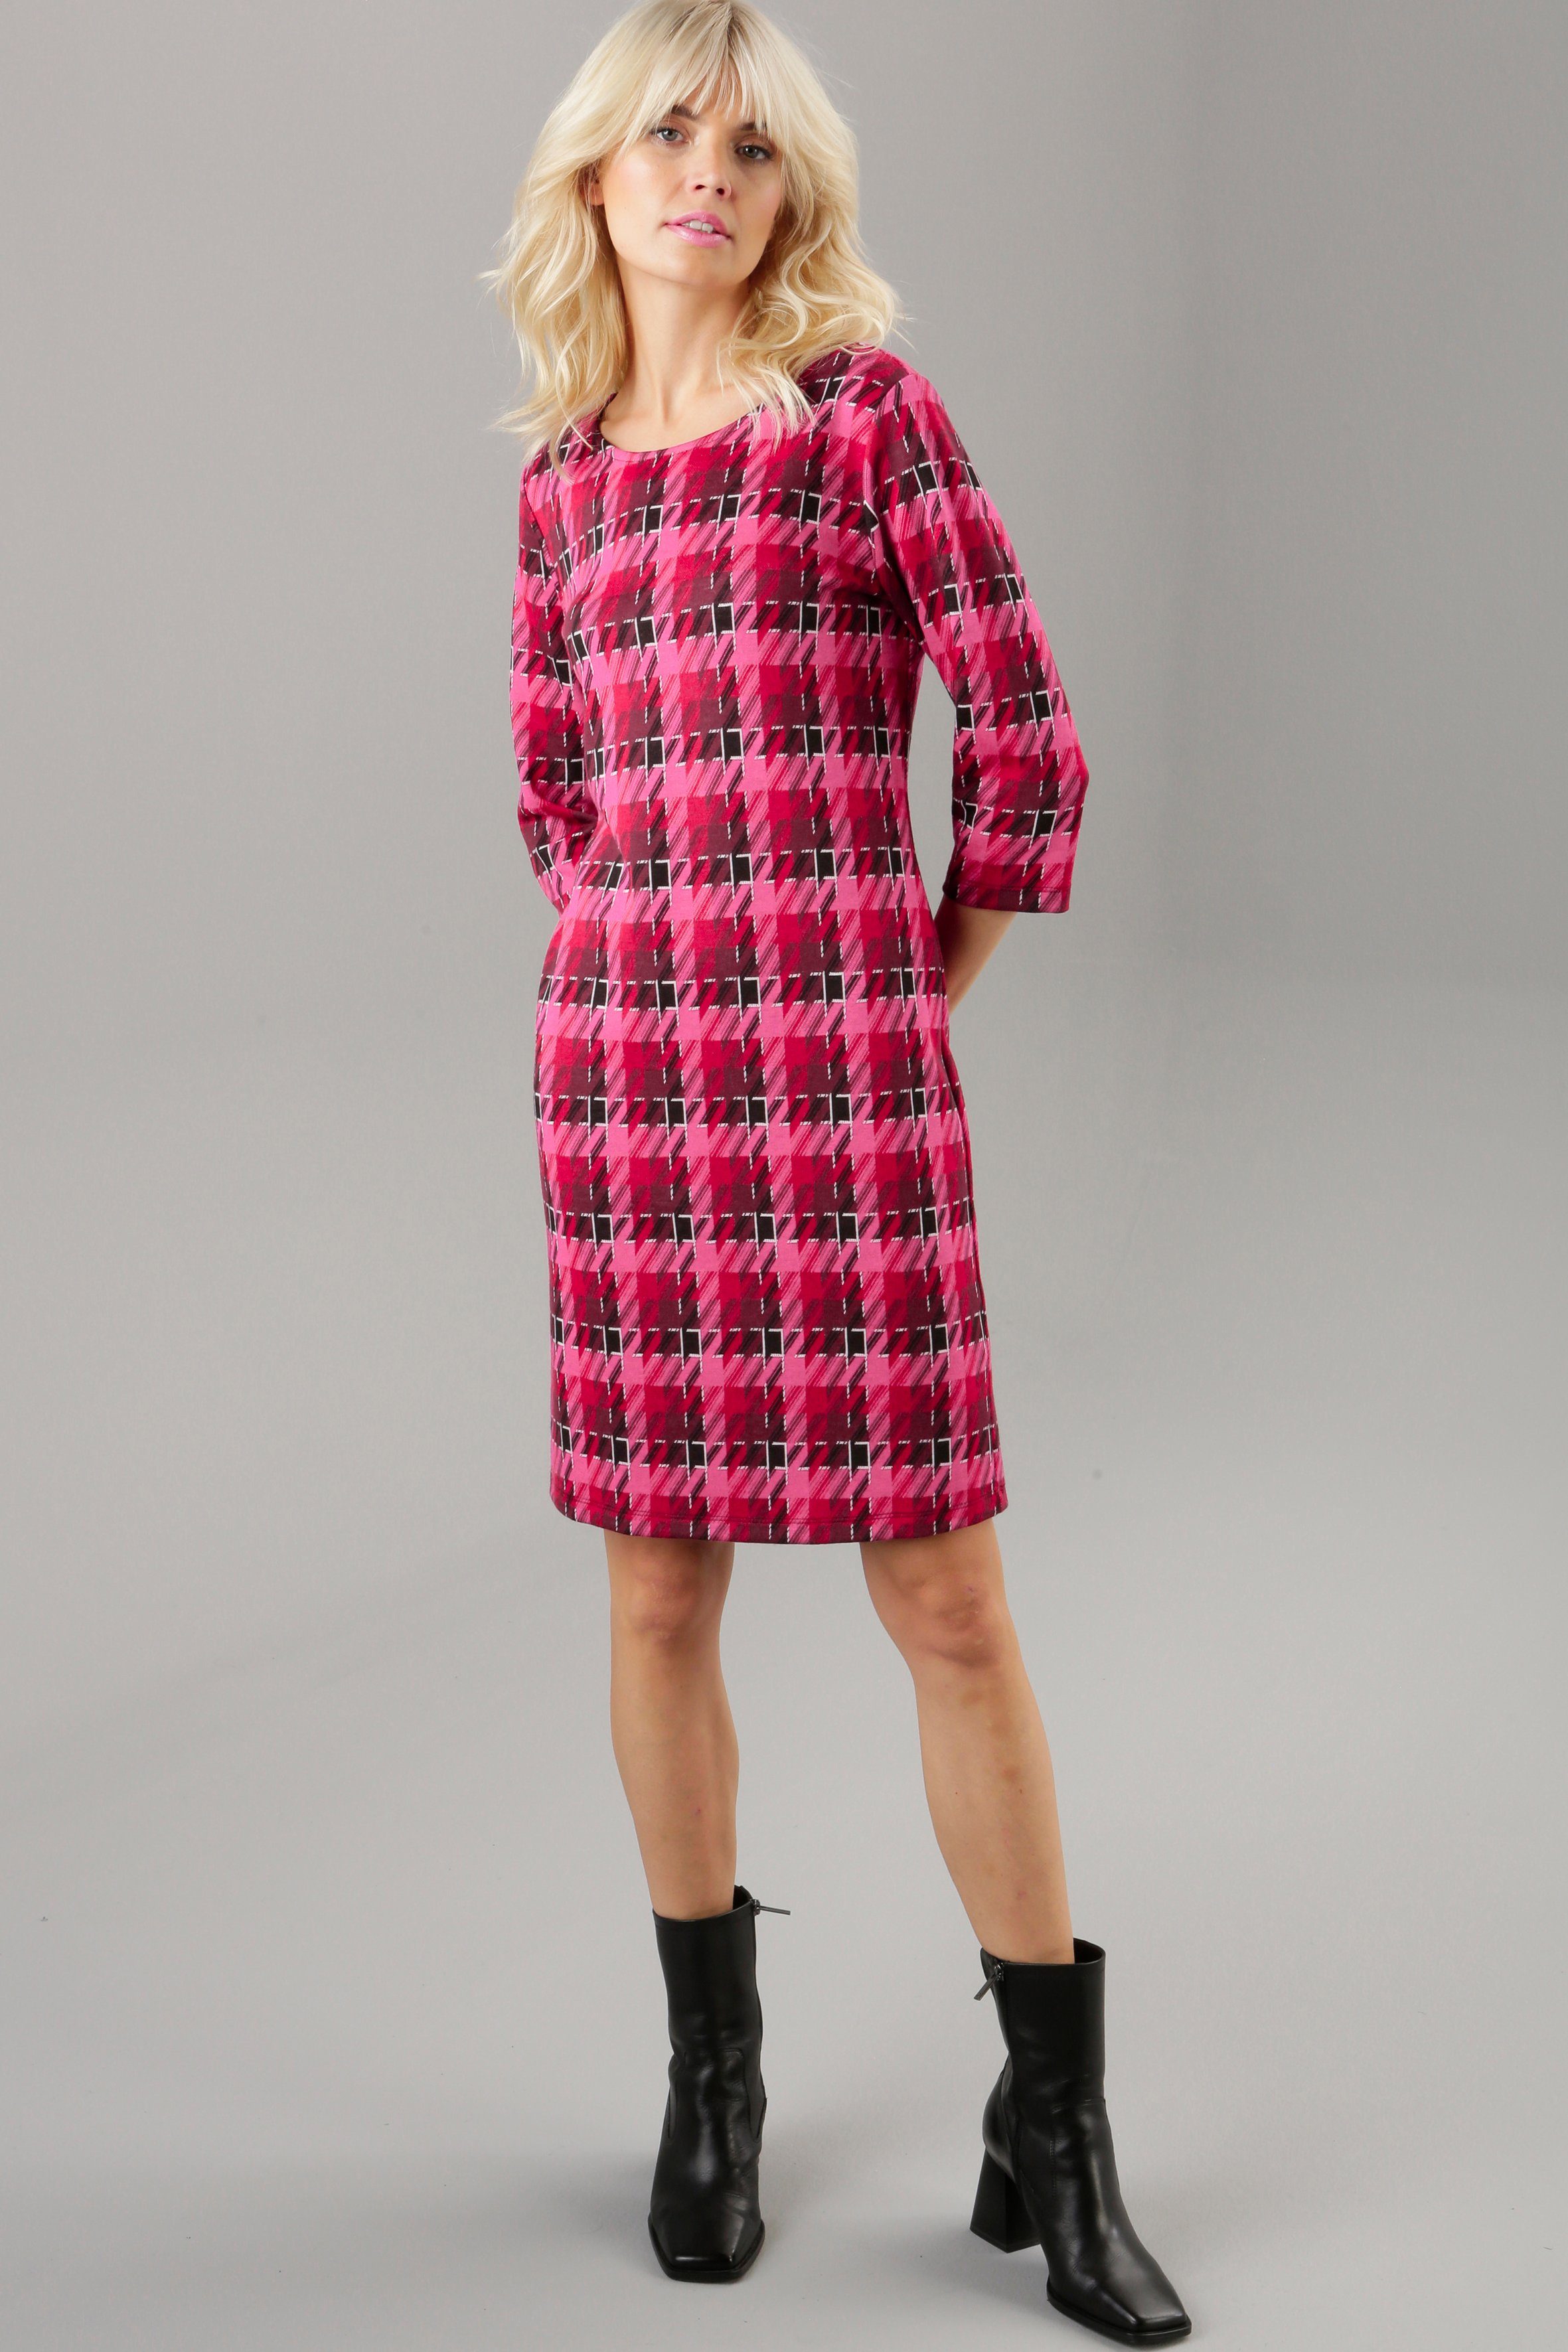 mit Knallfarben Jerseykleid trendy in SELECTED Aniston Allover-Muster